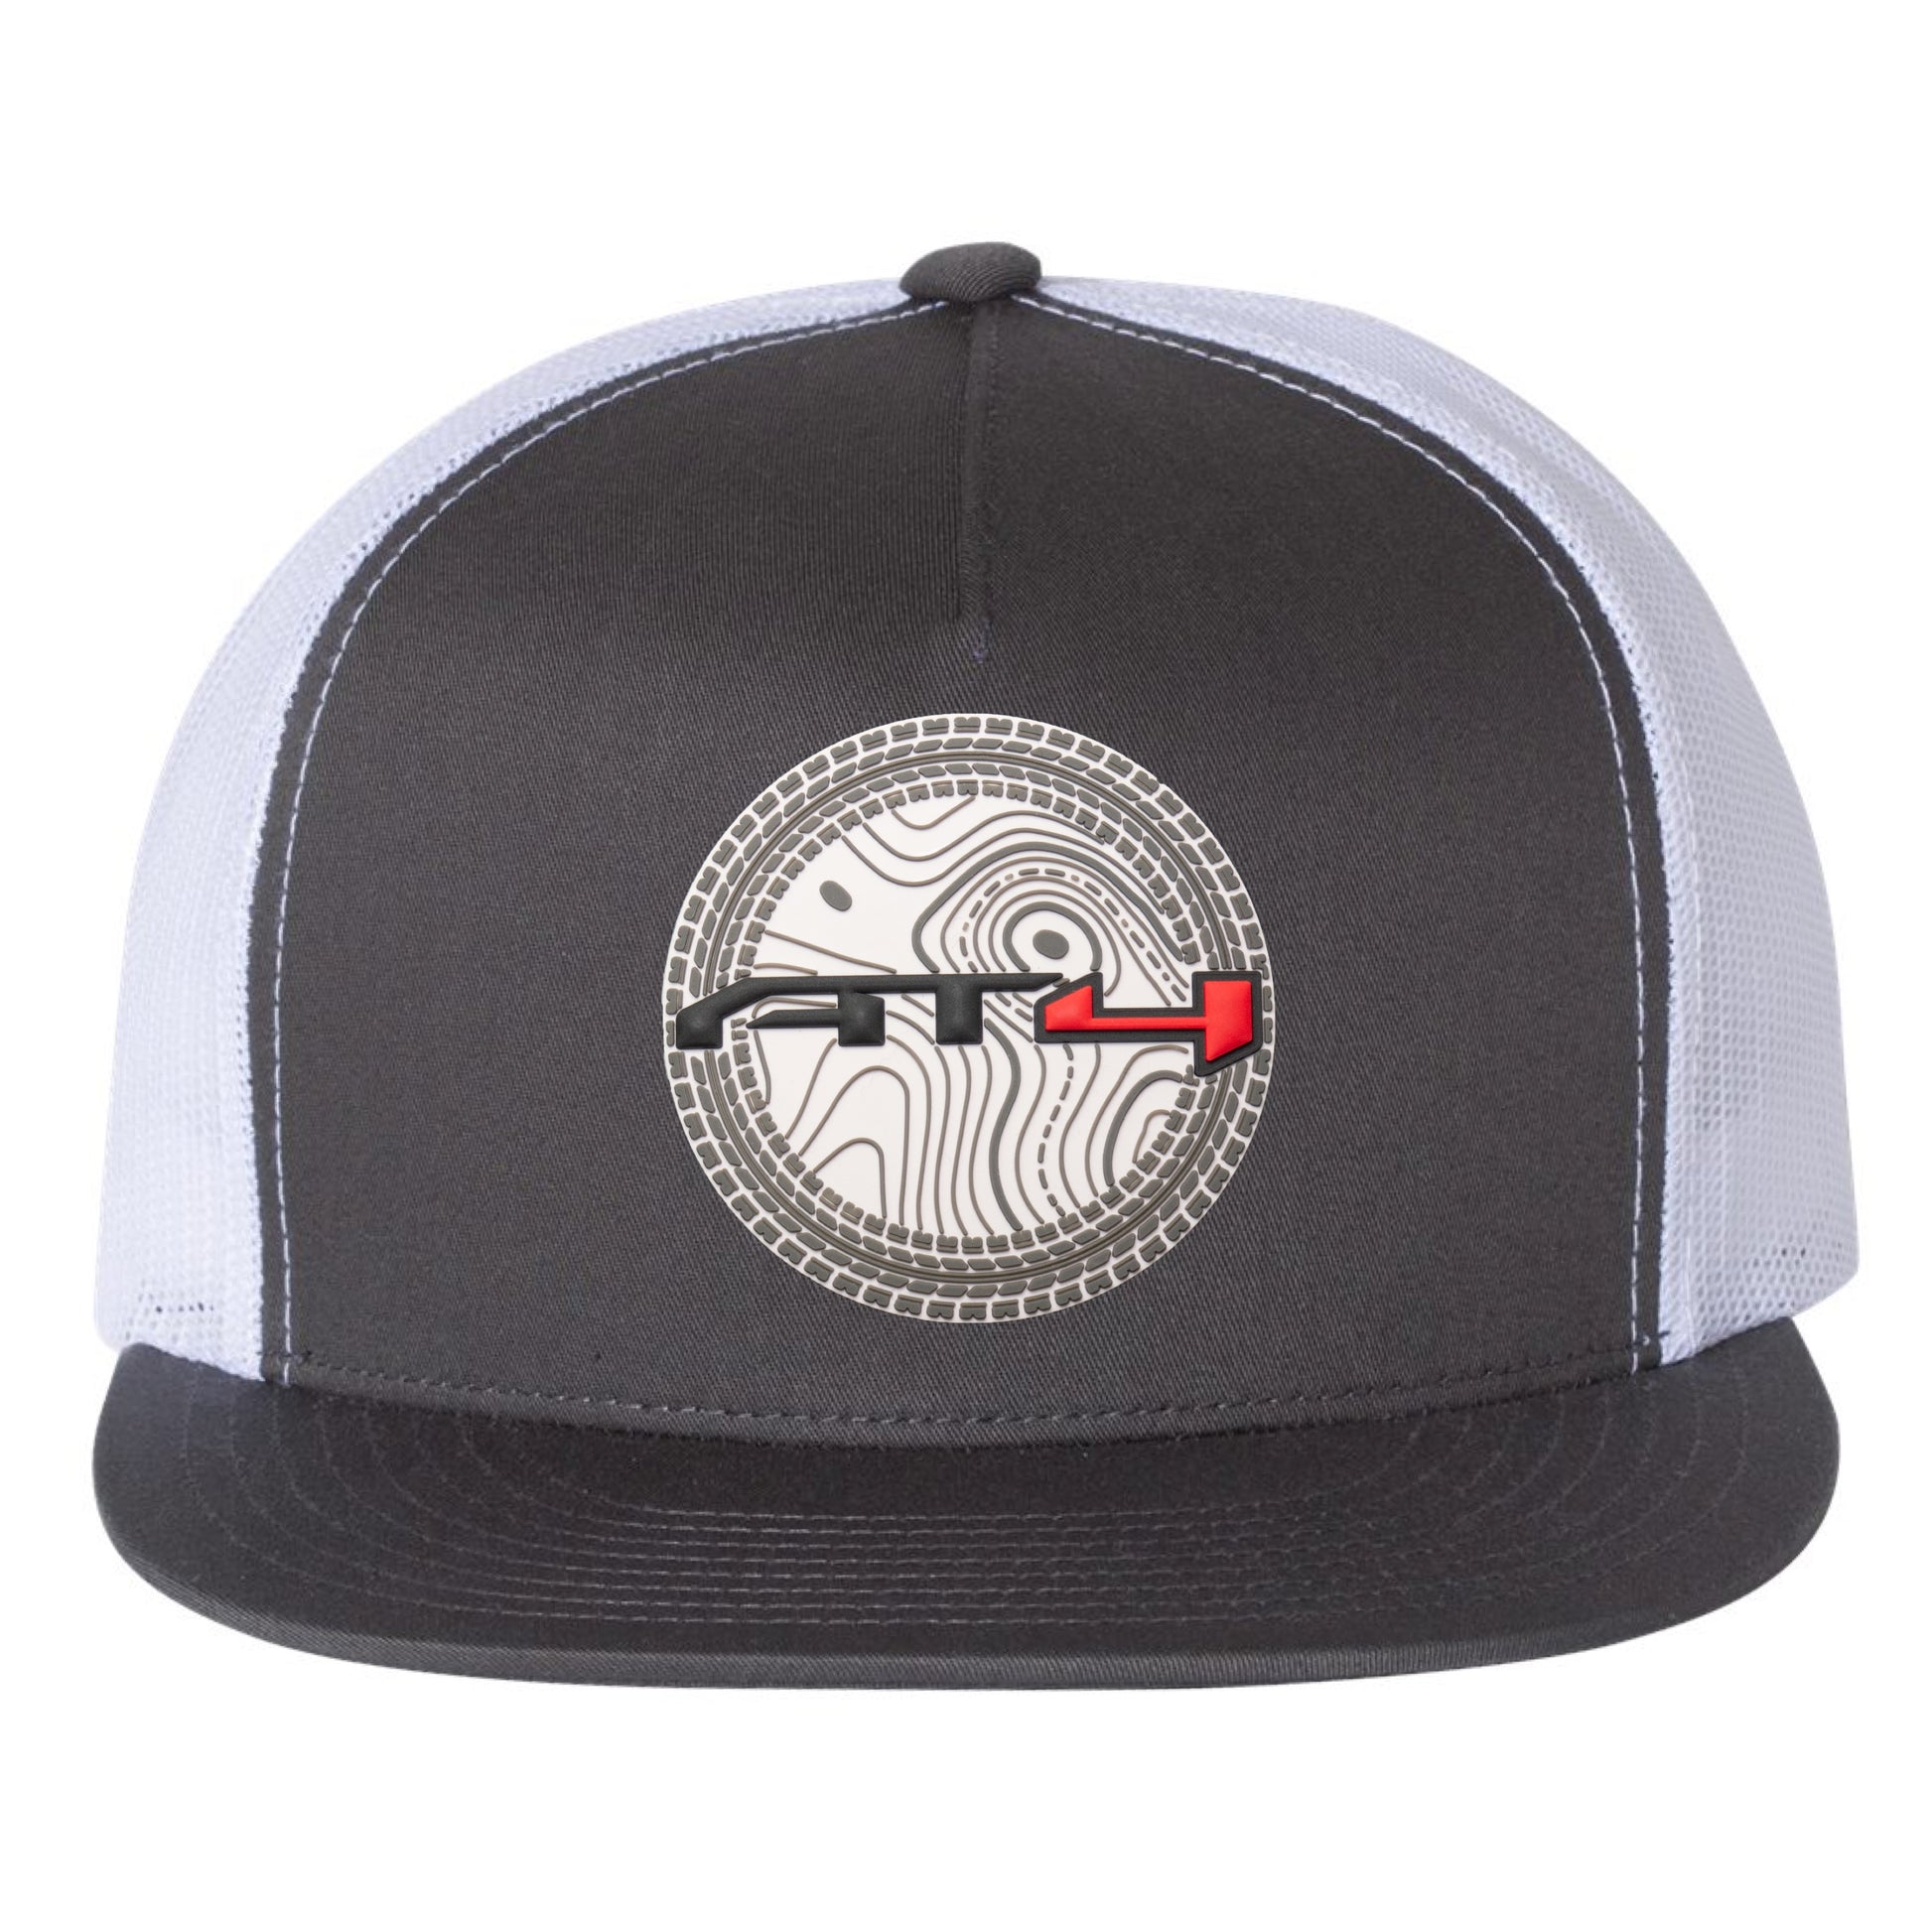 AT4 3D YP Snapback Flat Bill Trucker Hat- Charcoal/ White - Ten Gallon Hat Co.